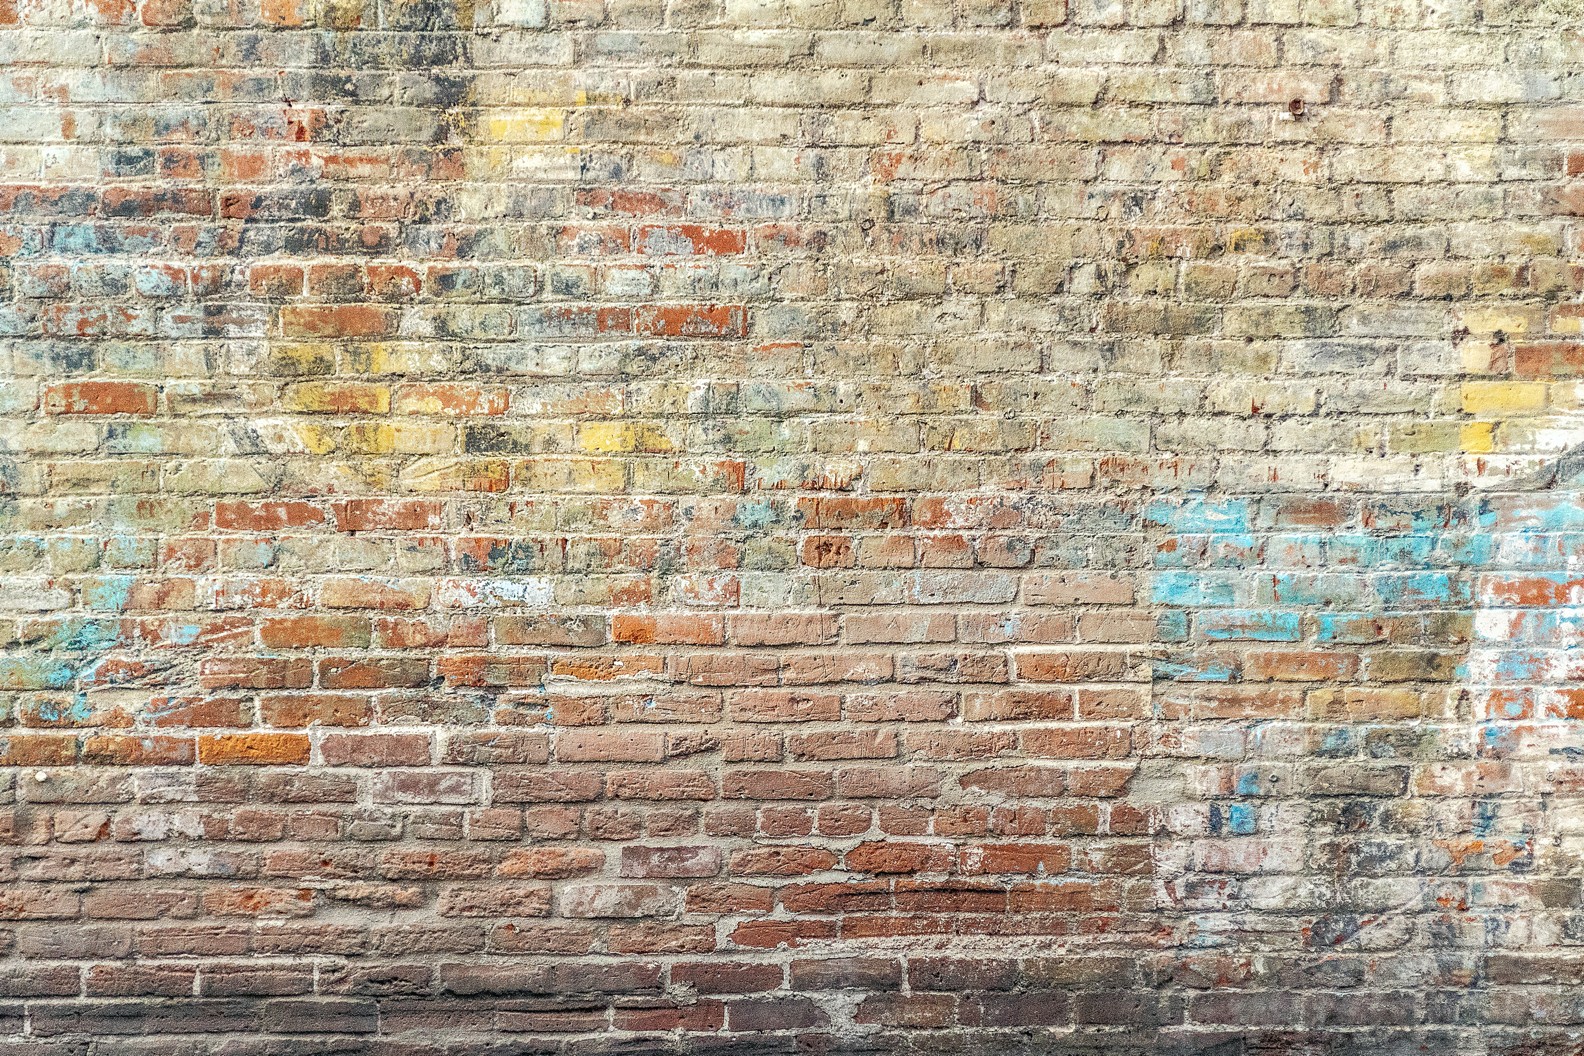 faded-graffiti-on-brick-wall.png